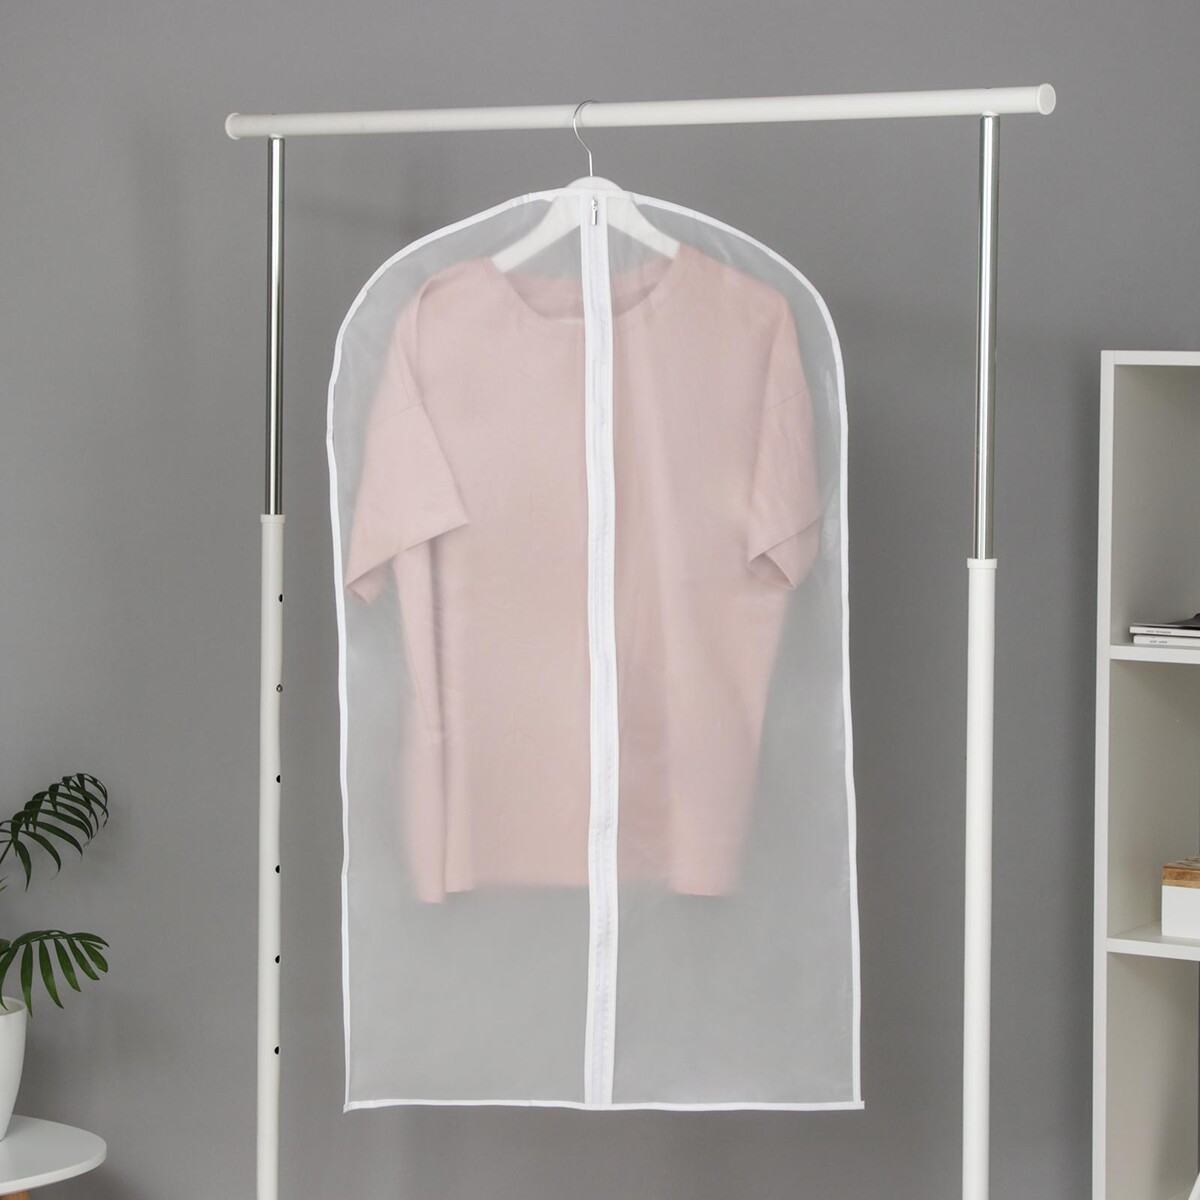 Чехол для одежды плотный доляна, 60×100 см, peva, цвет белый чехол для одежды ladо́m 60×137 см плотный peva серый